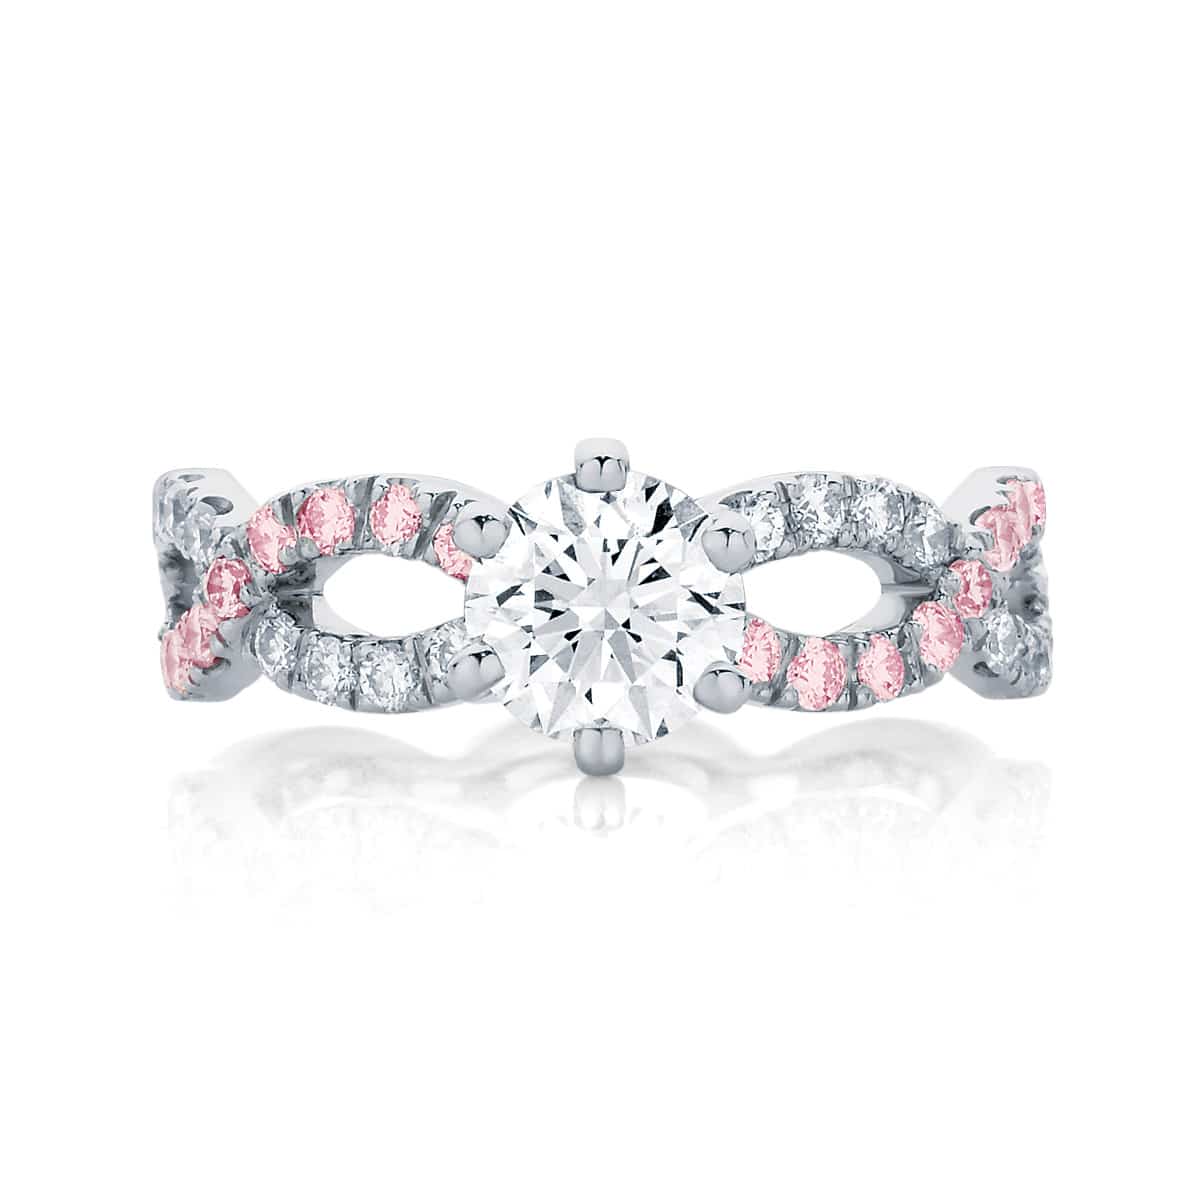 Pink Diamond Engagement Ring Platinum | Entwine IV